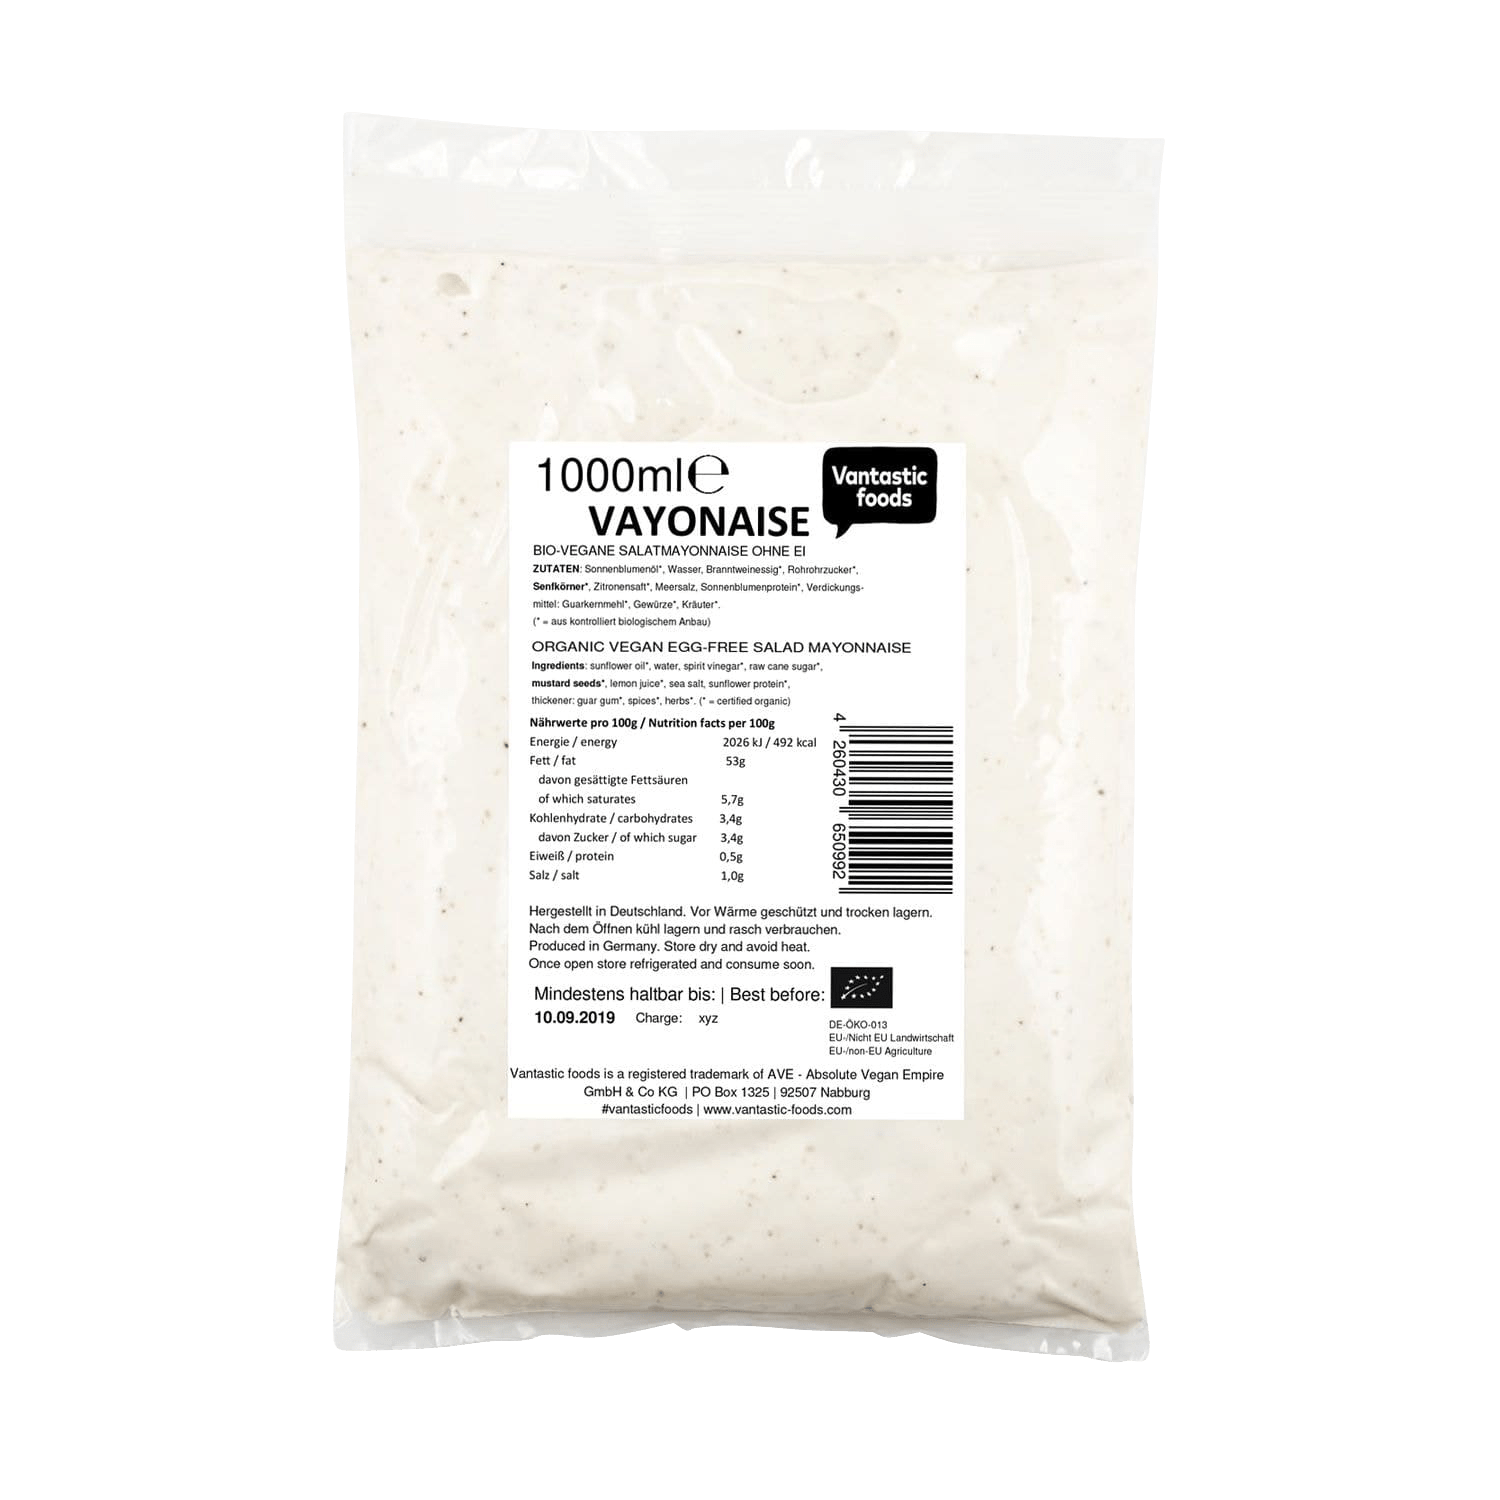 Vayonaise Gastro Pack, Organic, 1000ml